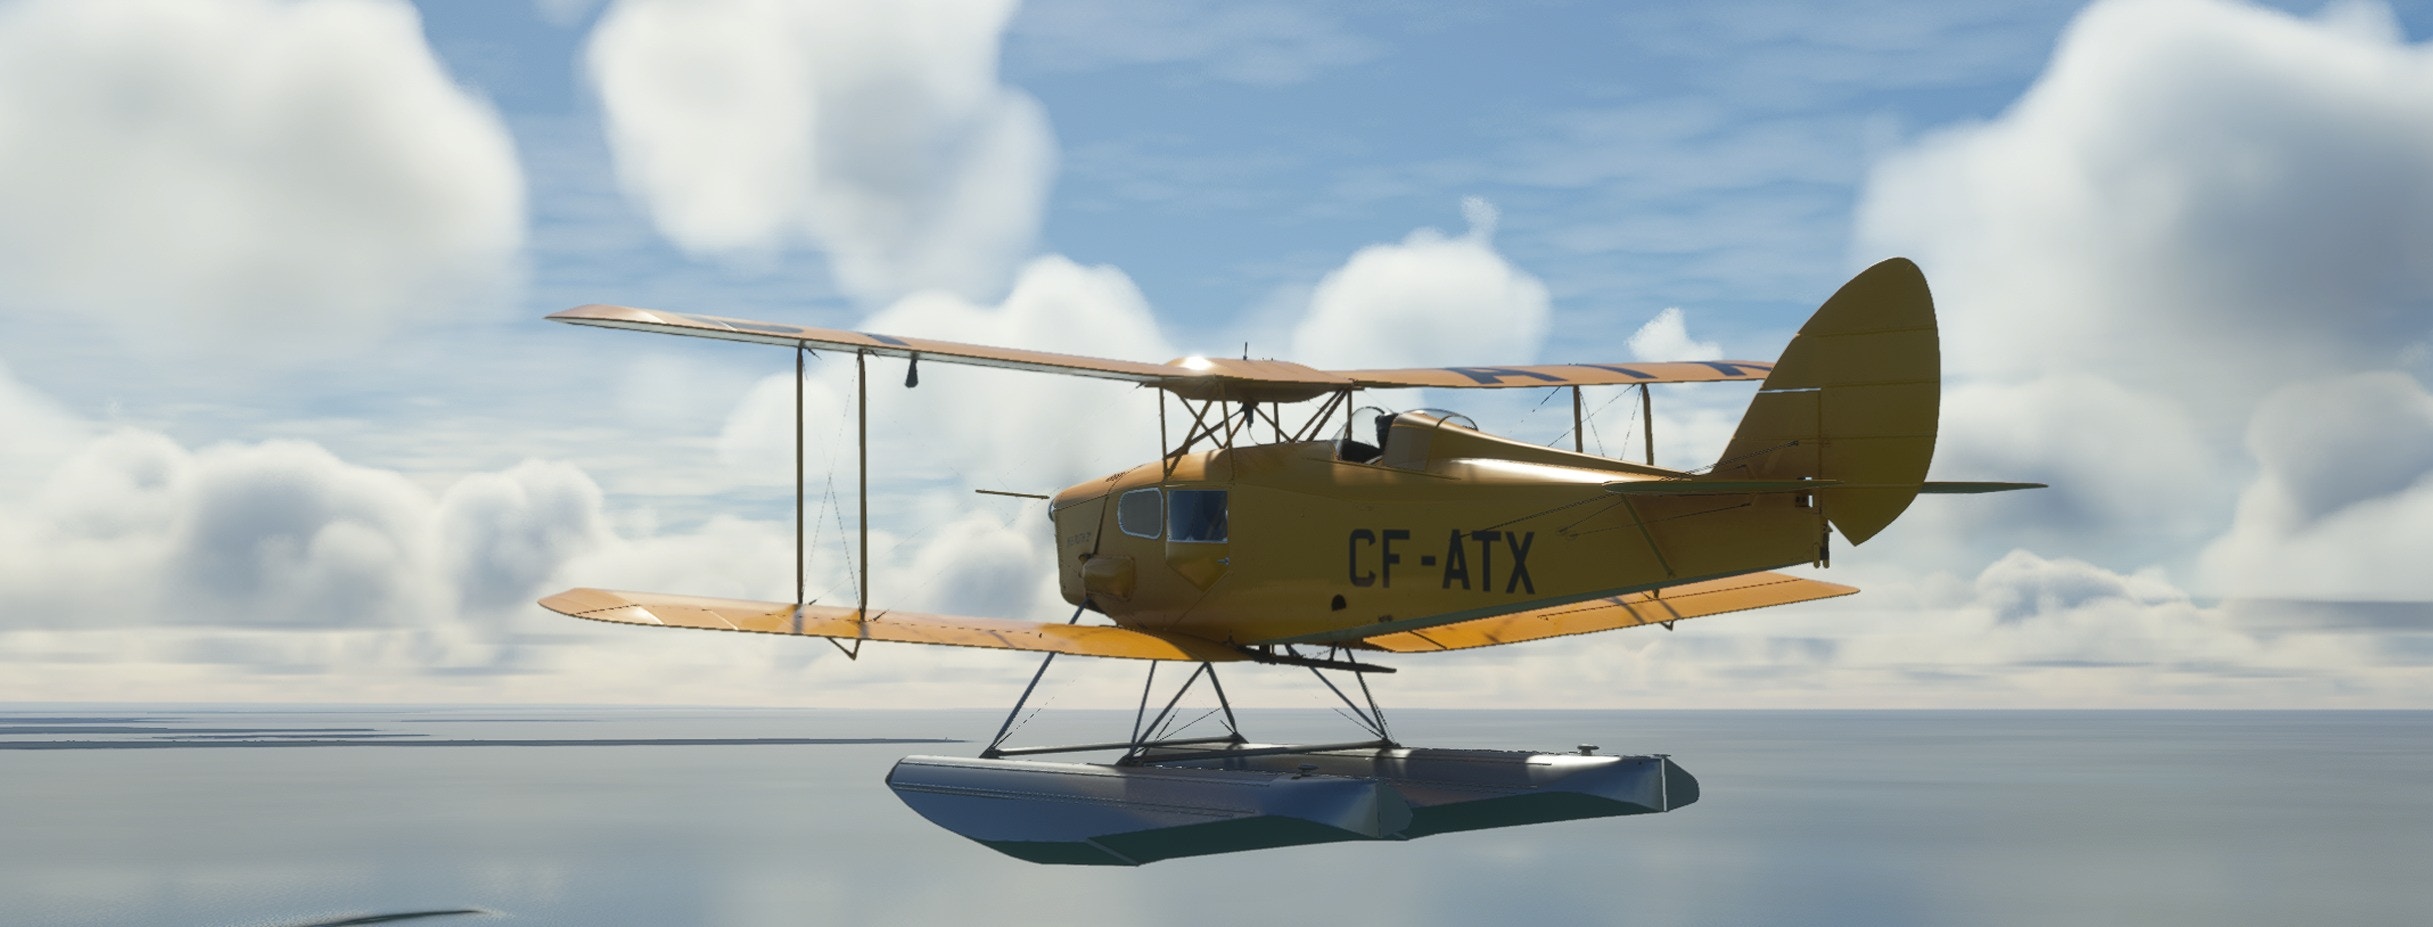 Flight Replicas Releases DH83 Fox Moth